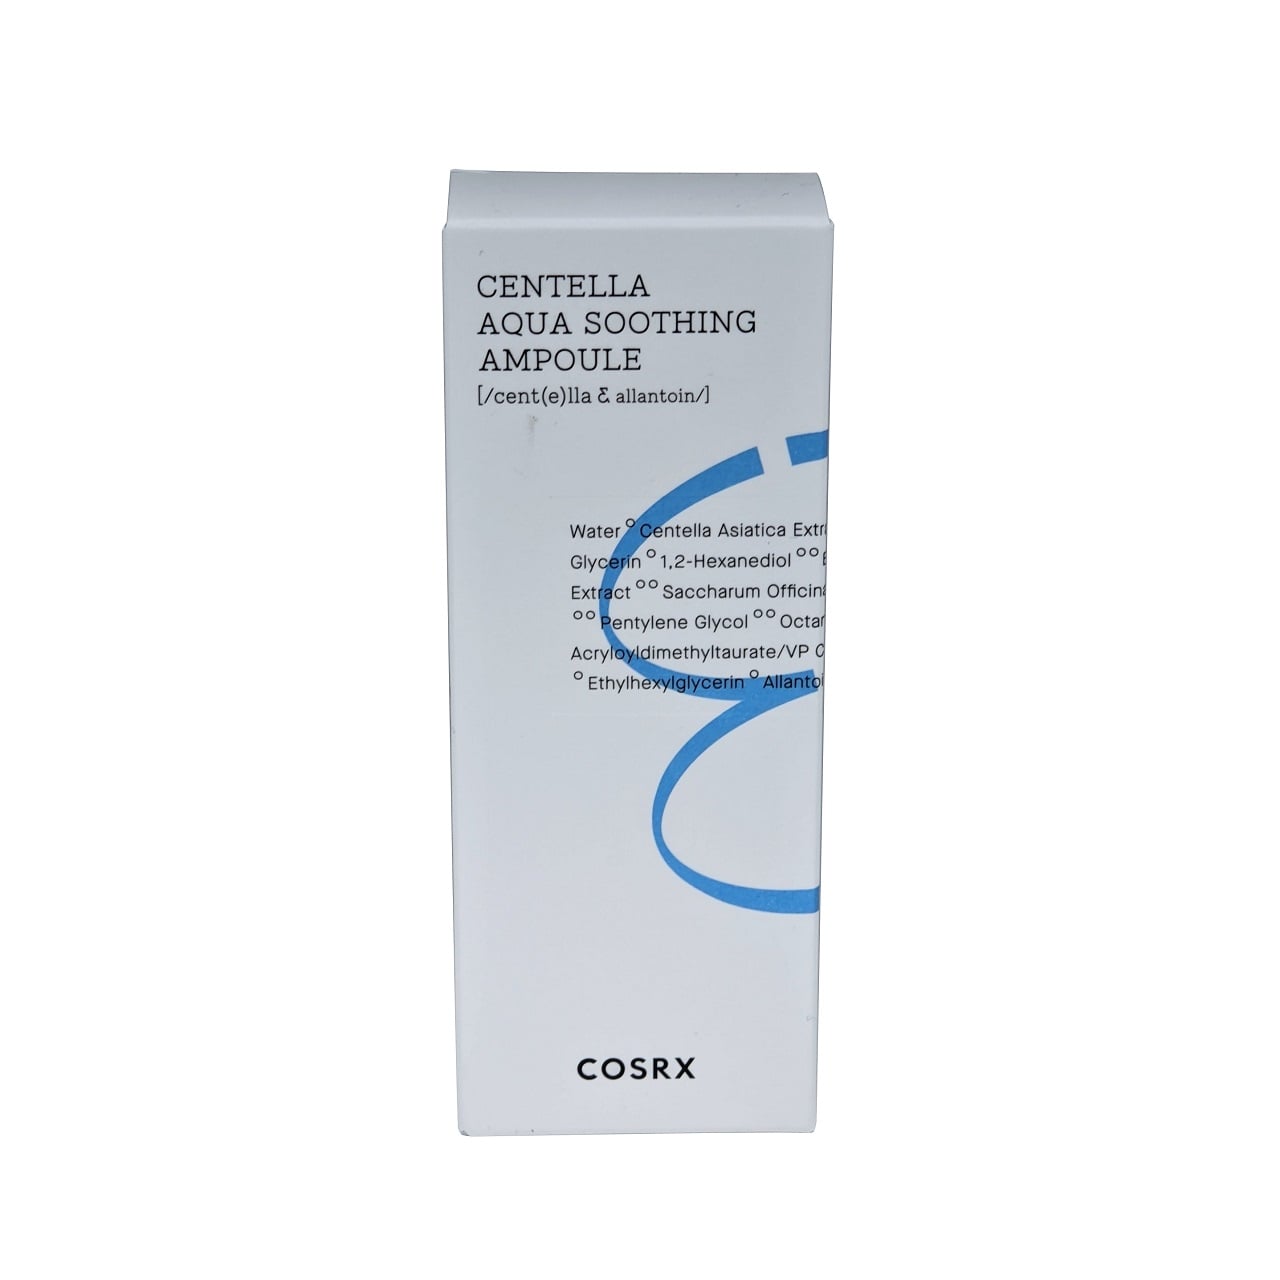 Product label for COSRX Hydrium Centella Aqua Soothing Ampoule